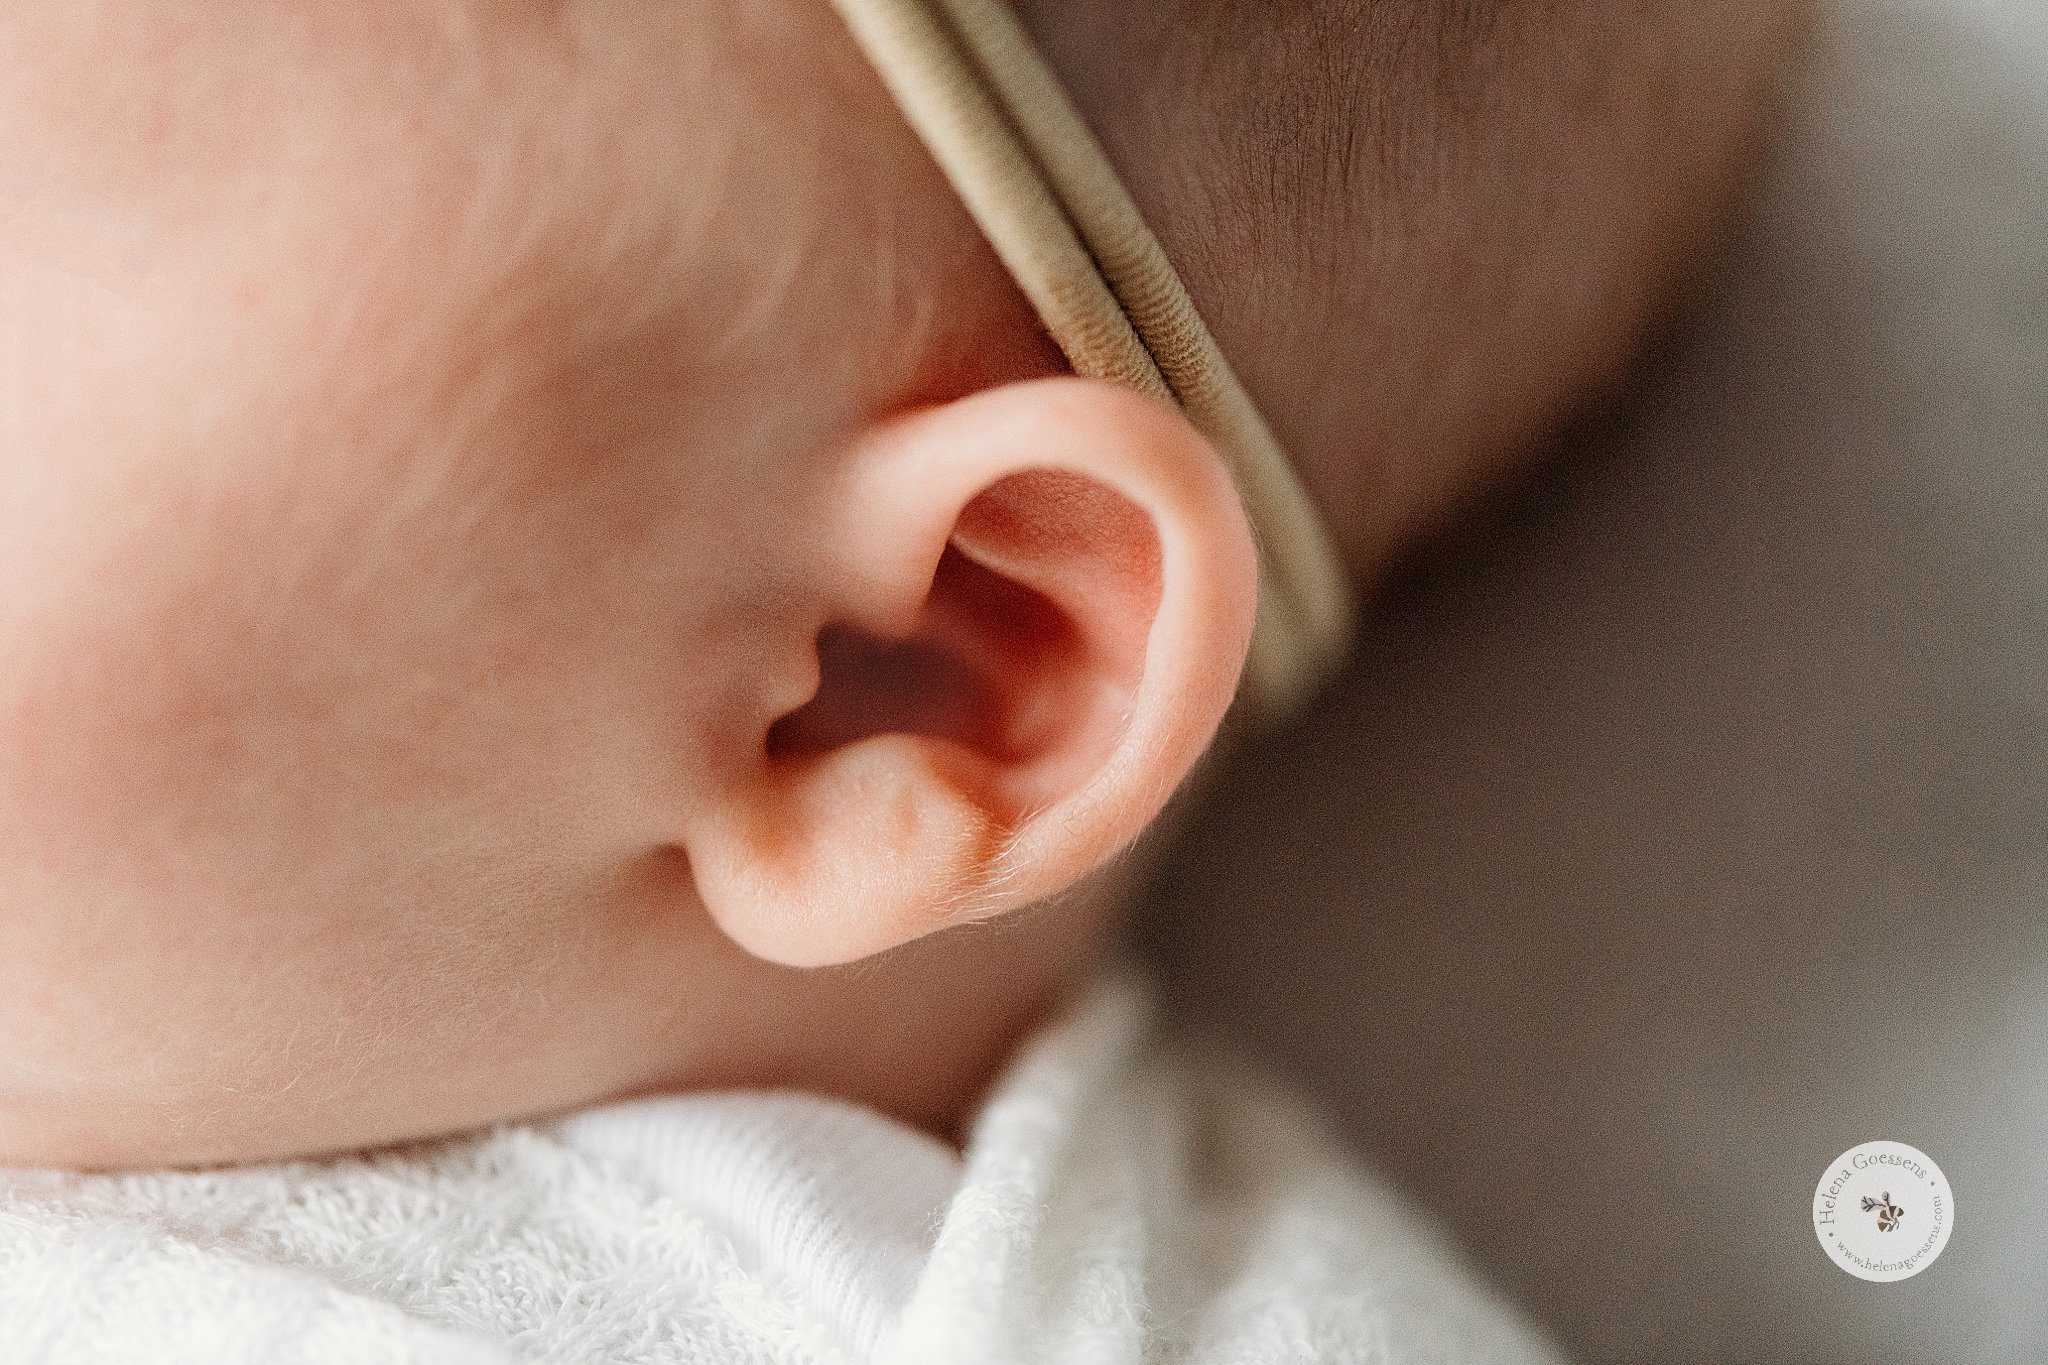 detail photo of baby's ear and headband 